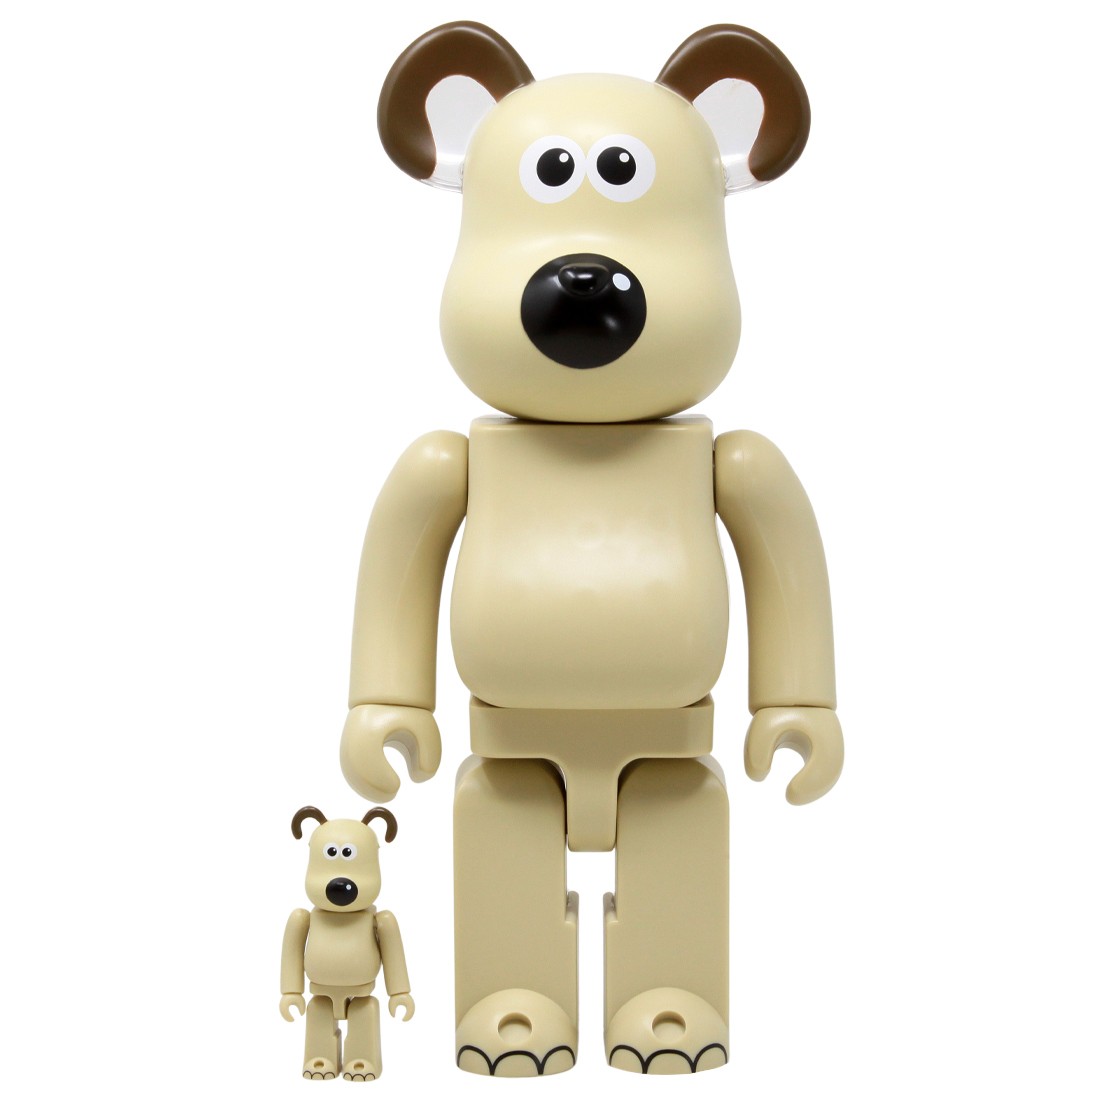 Medicom Wallace And Gromit - Gromit 100% 400% Bearbrick Figure Set (beige)